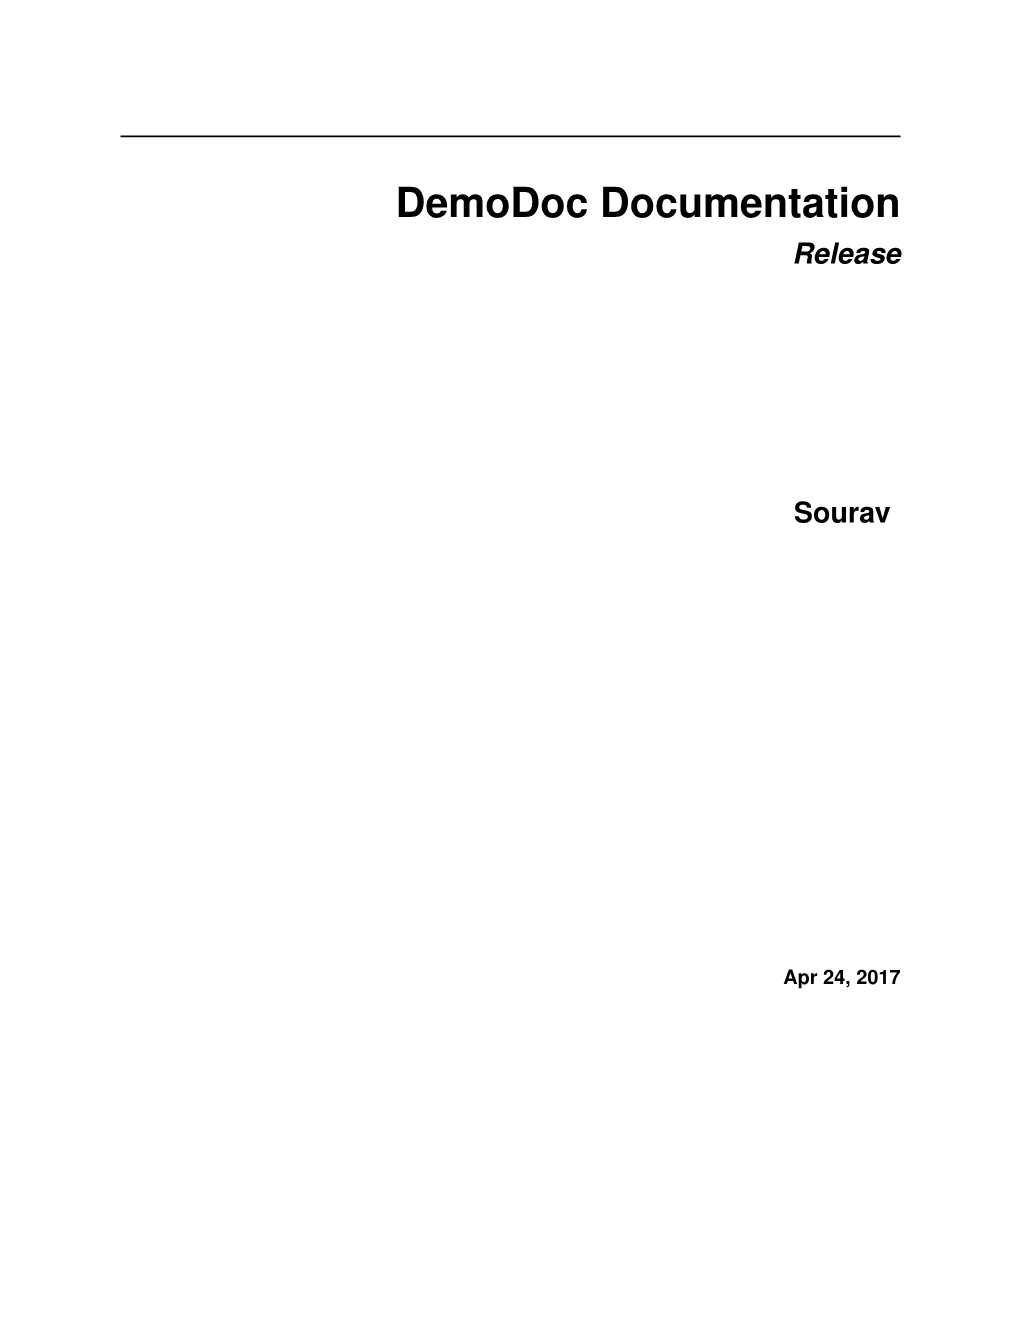 Demodoc Documentation Release